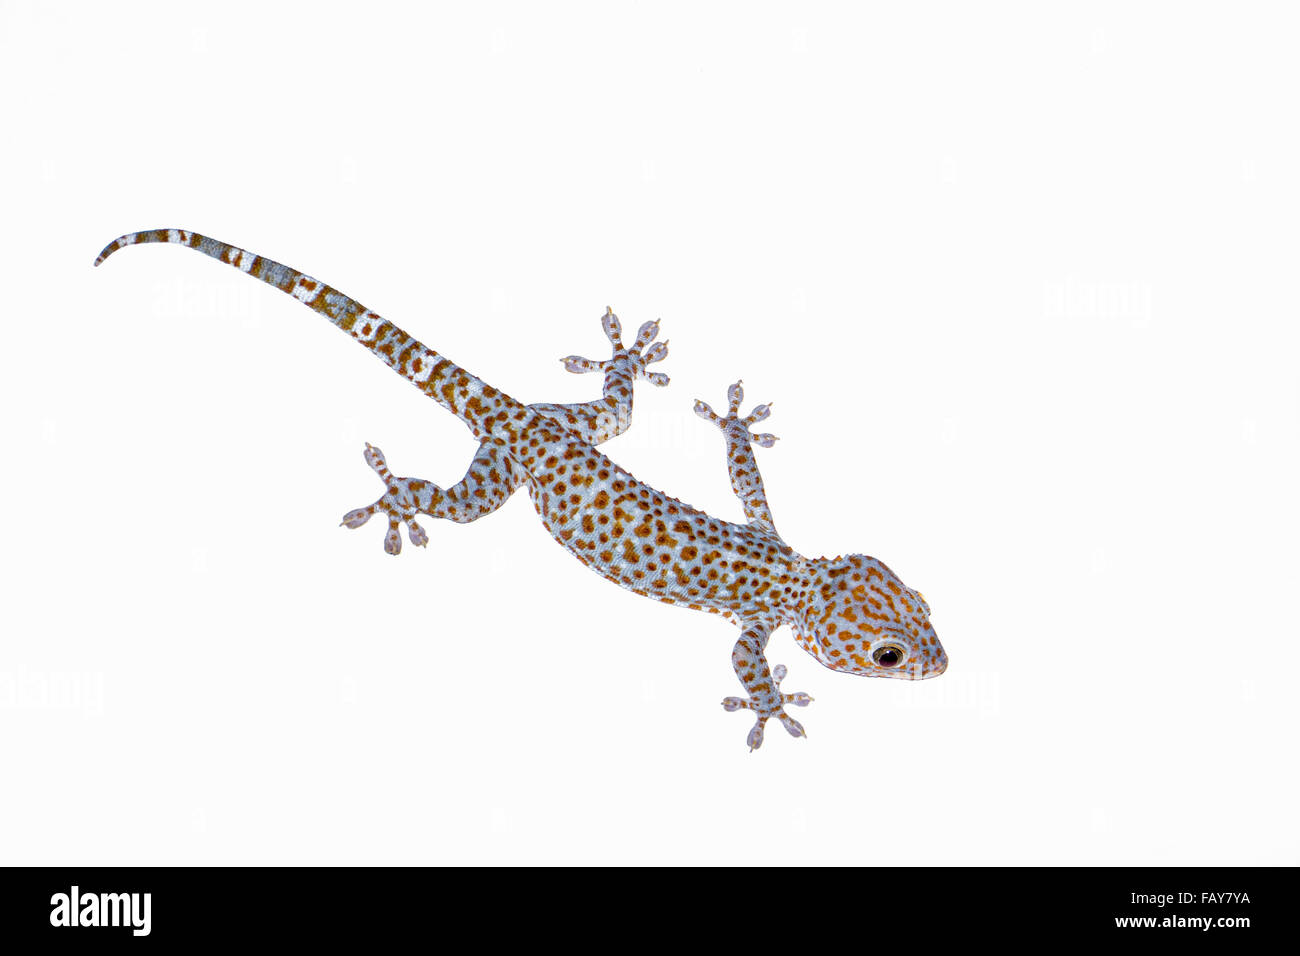 Indonesia, Tejakula, Bali, Giant Gecko Stock Photo